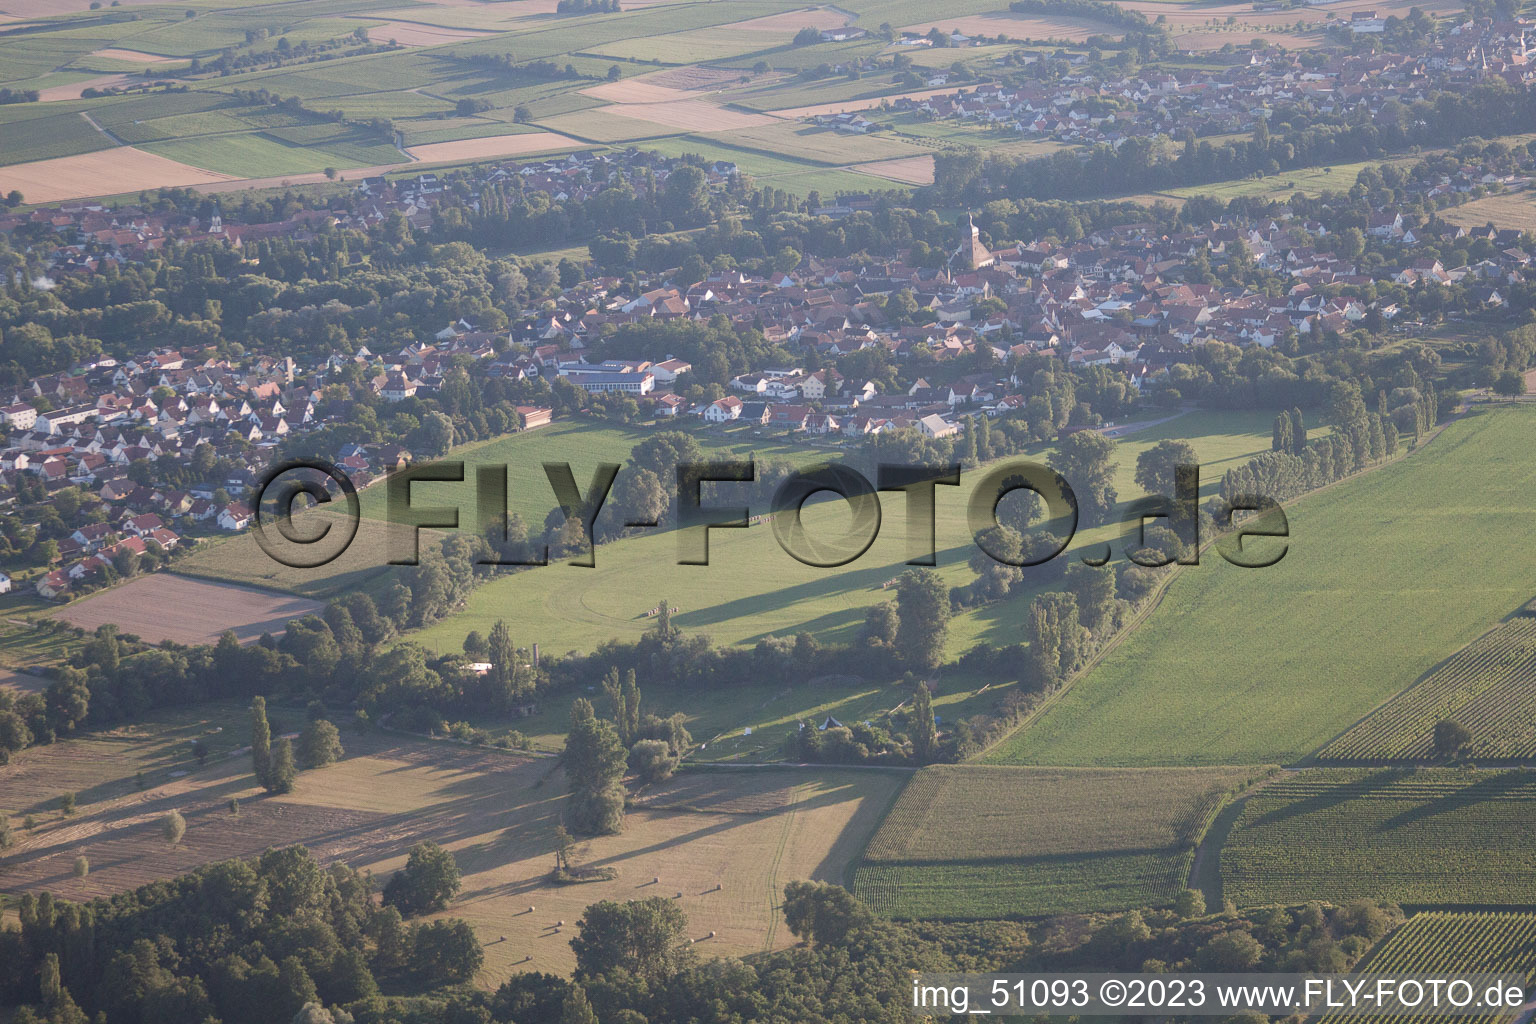 District Billigheim in Billigheim-Ingenheim in the state Rhineland-Palatinate, Germany from the drone perspective